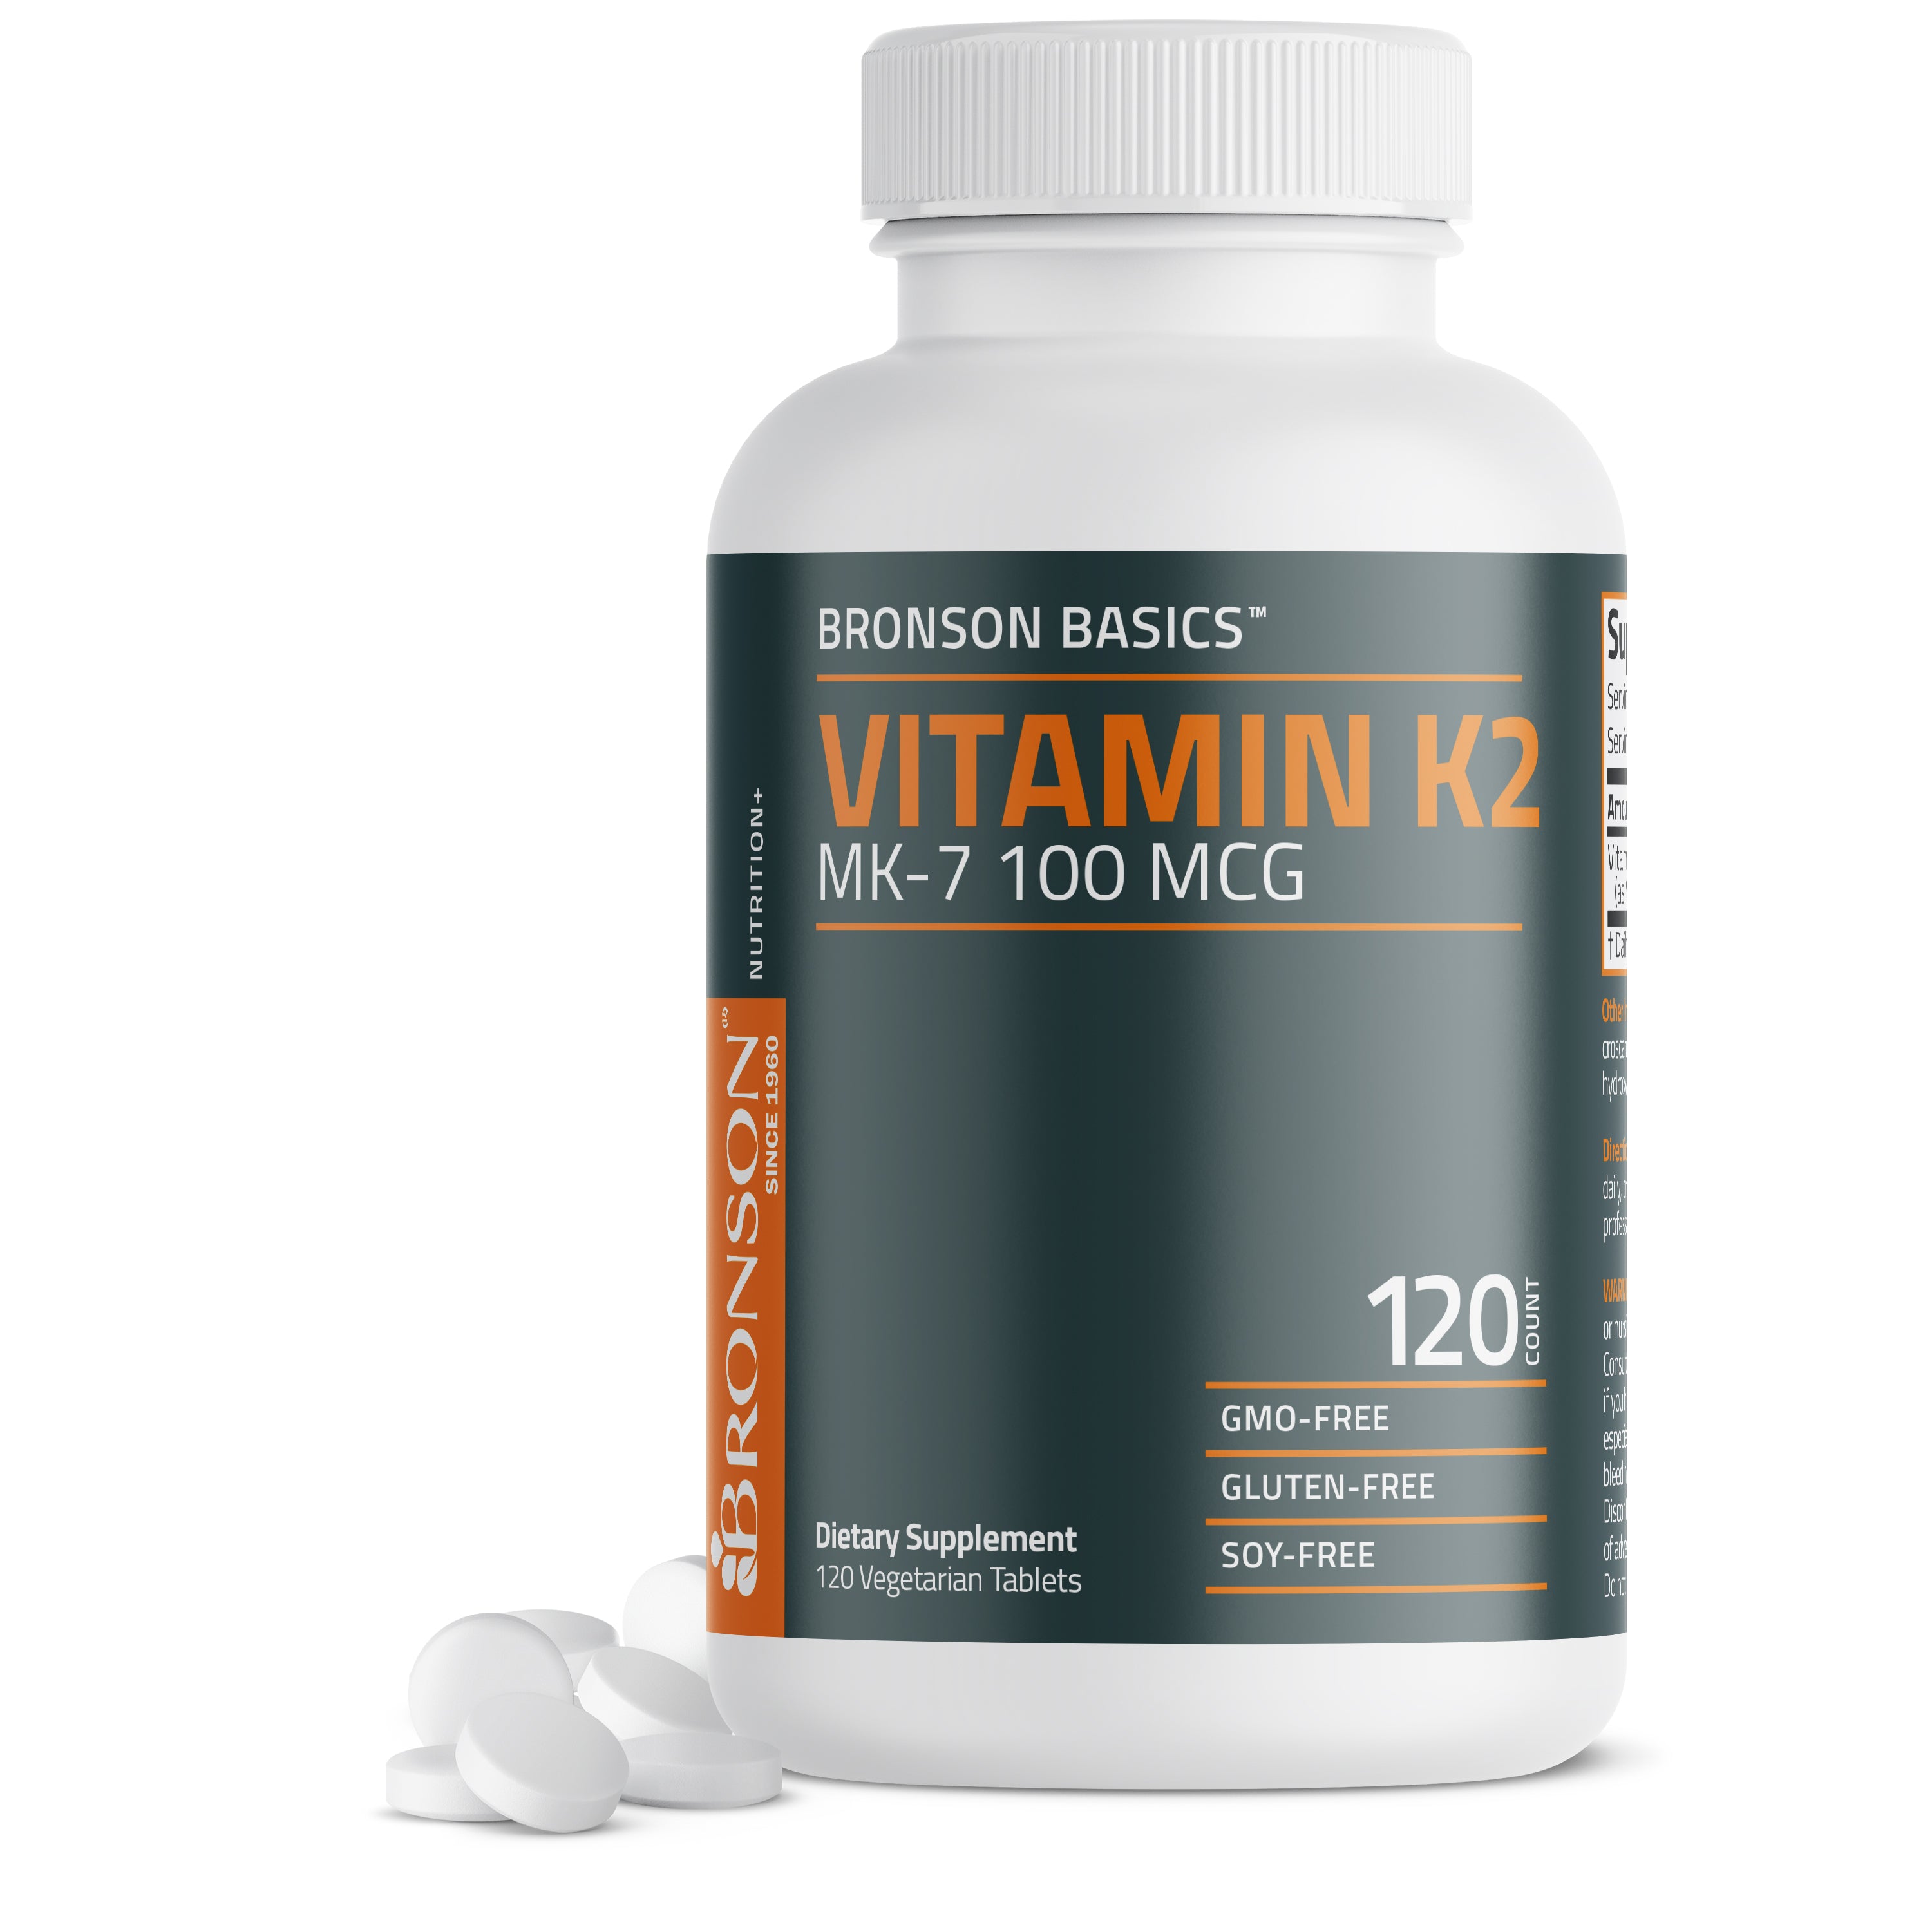 Vitamin K2 MK-7 100 MCG view 1 of 6